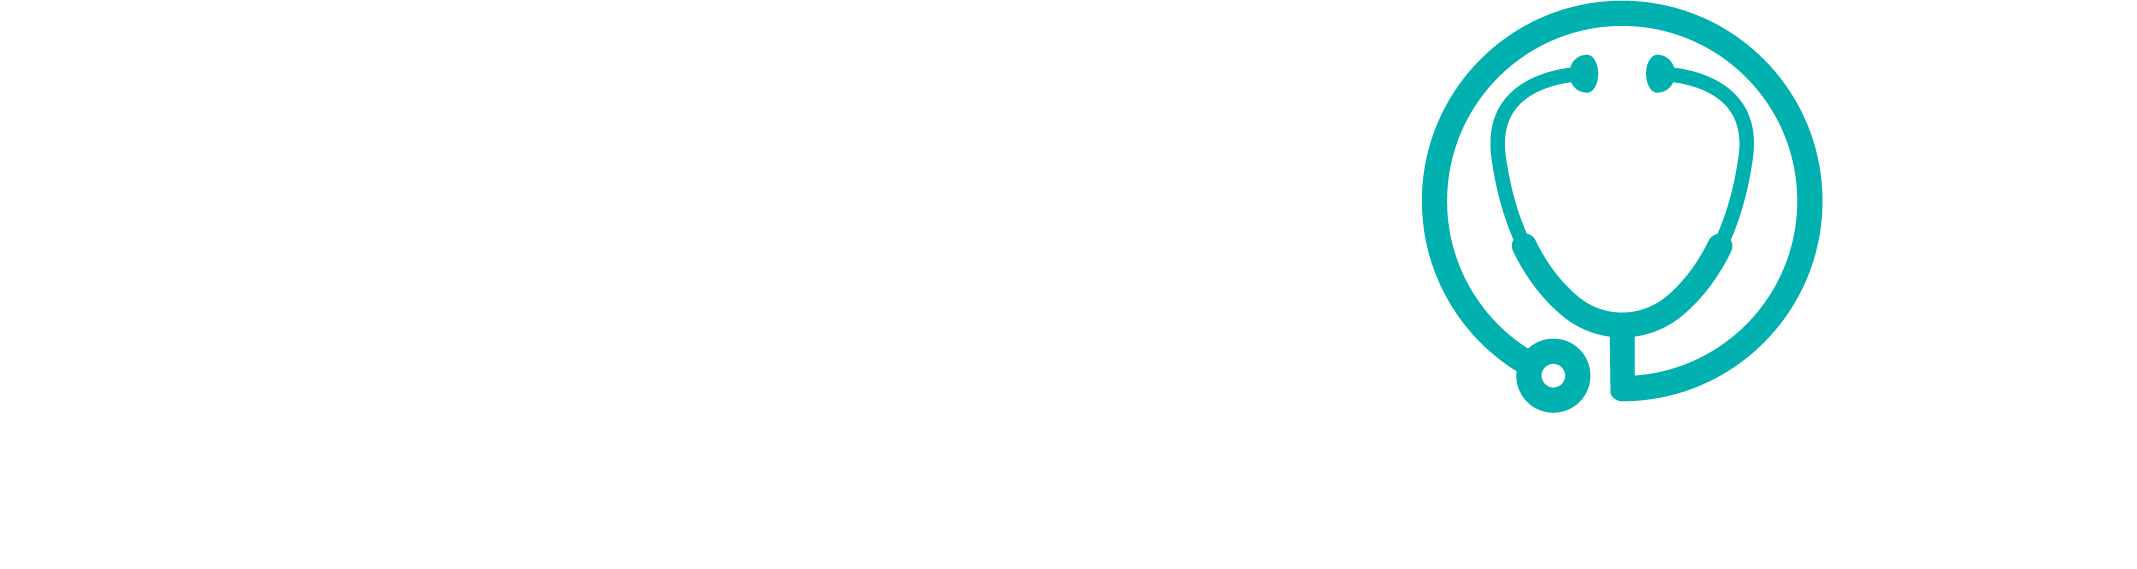 Lawson Family Medicine Logo